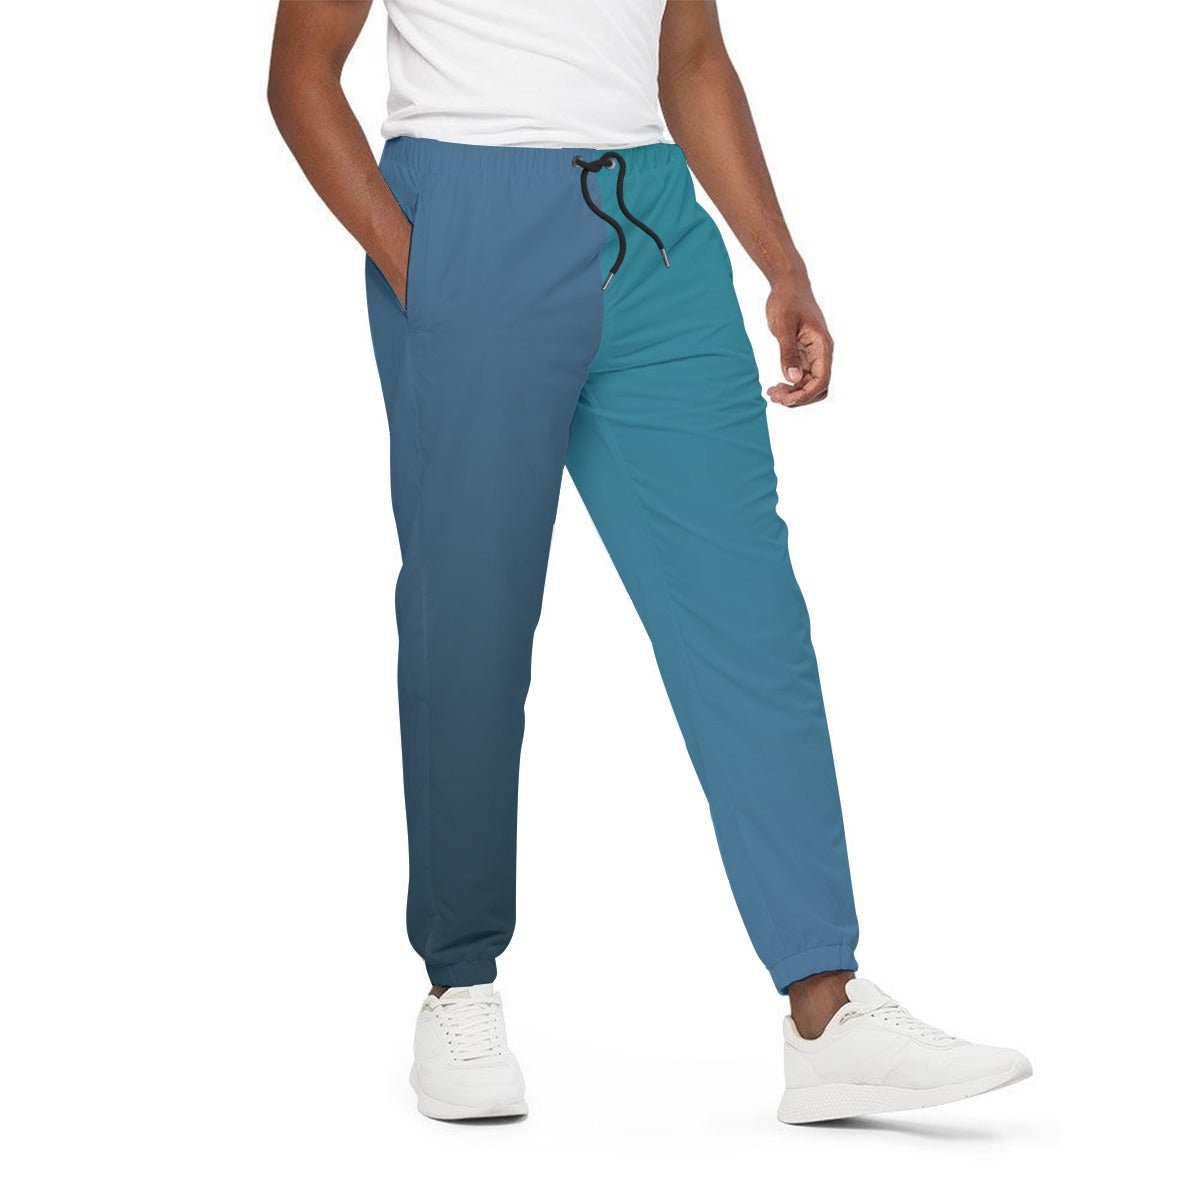 Blue Two-Tone Sweatpants | Pants | All Around Artsy Fashion